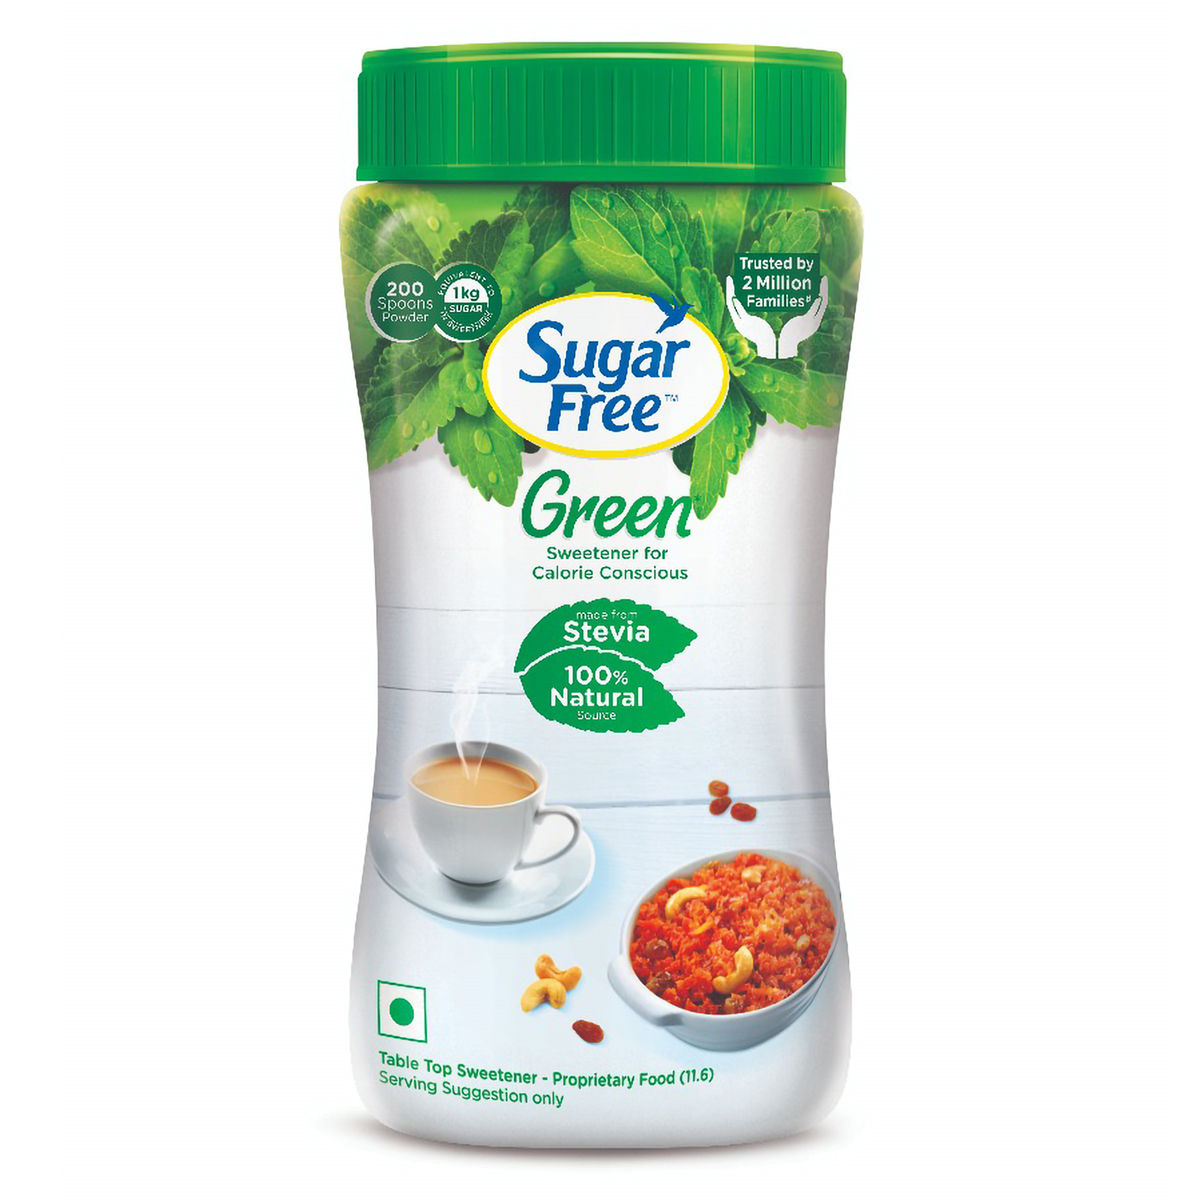 Buy Sugar Free Green Stevia Low Calorie Sweetener Powder, 200 gm Online